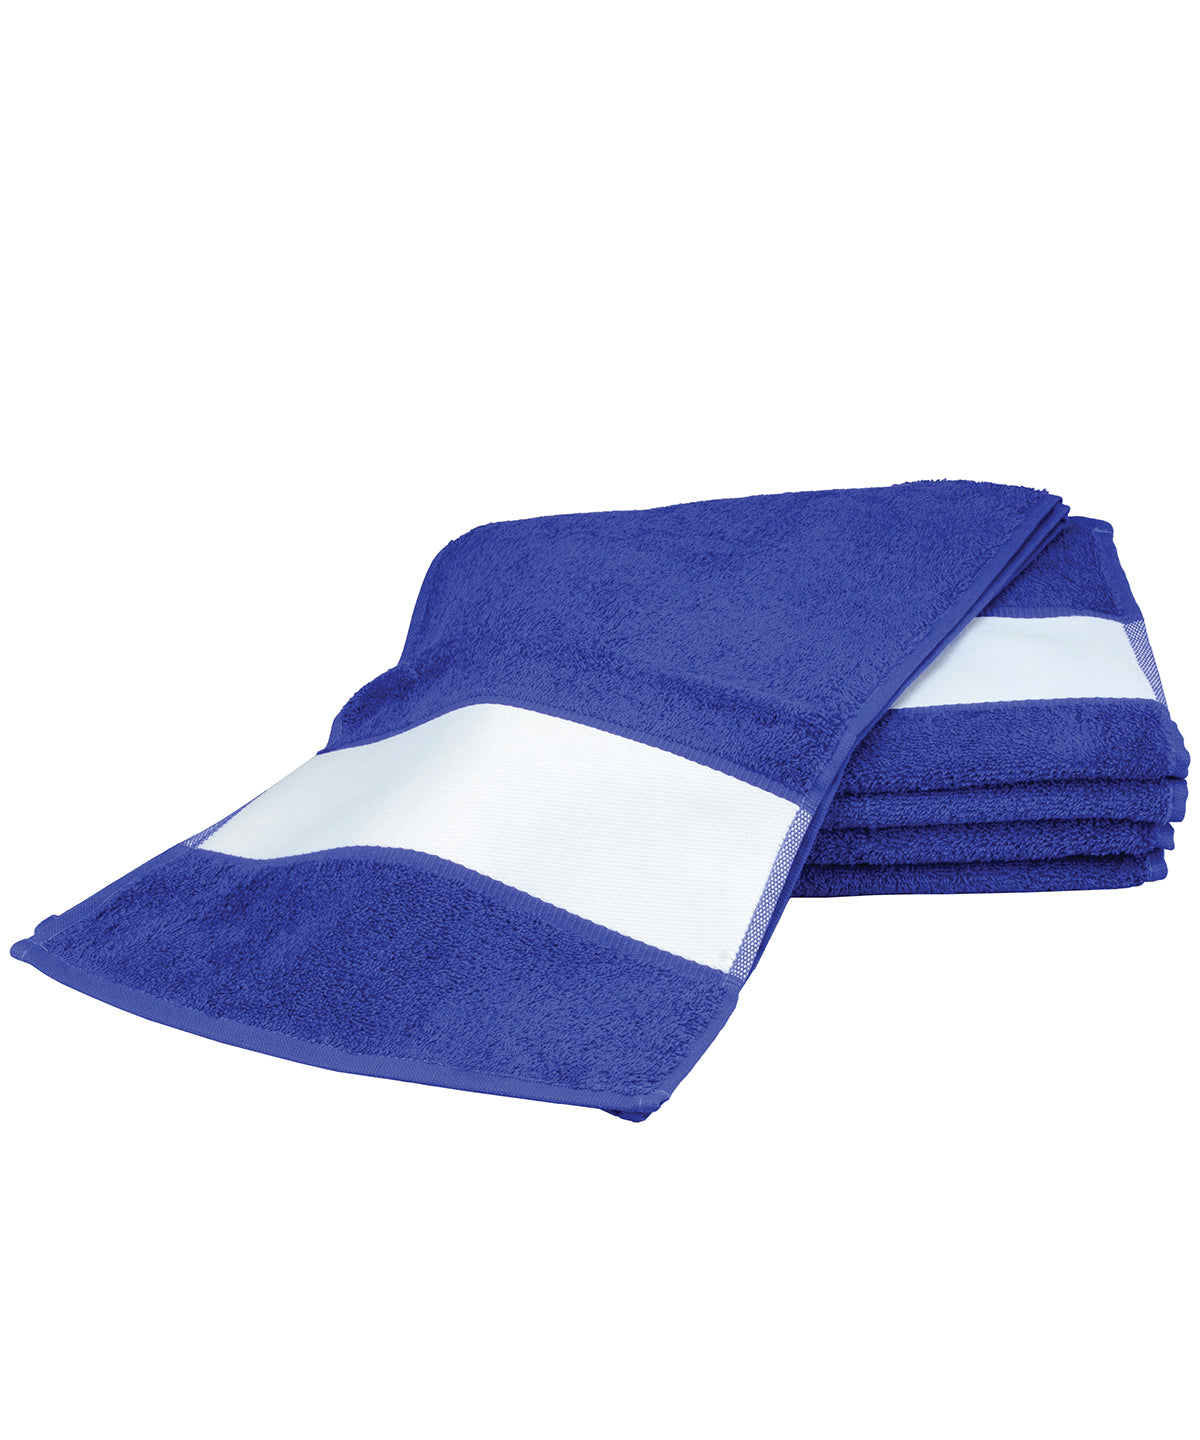 Personalised Towels - Mid Blue A&R Towels ARTG® SUBLI-Me® sport towel